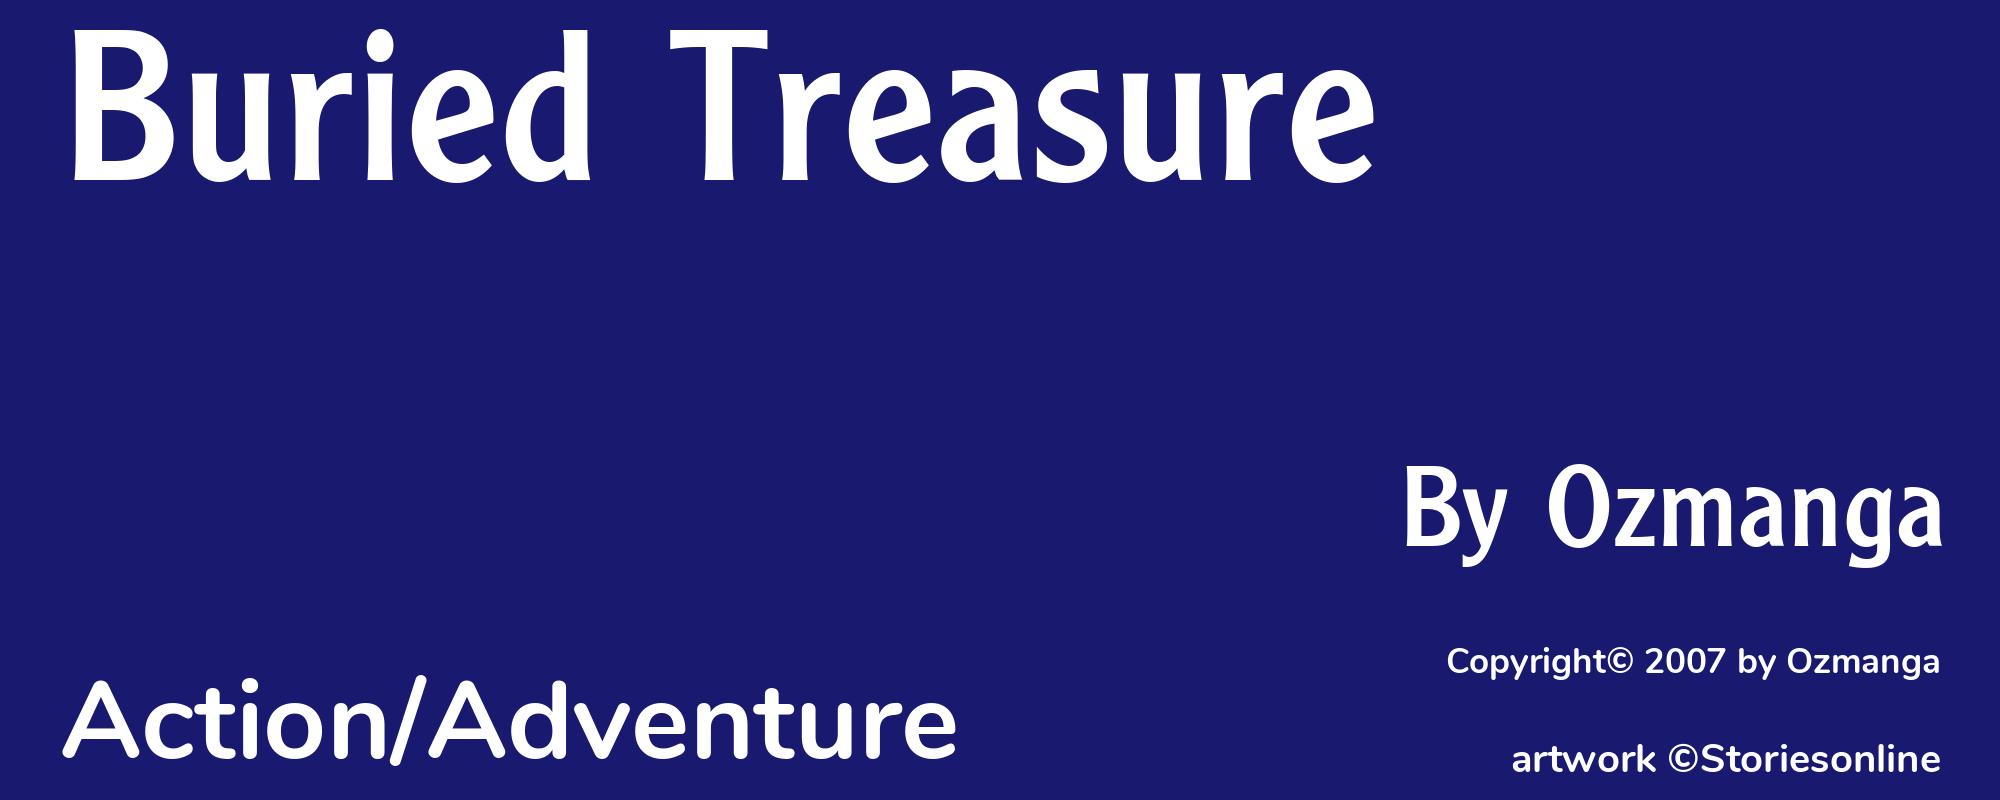 Buried Treasure - Cover